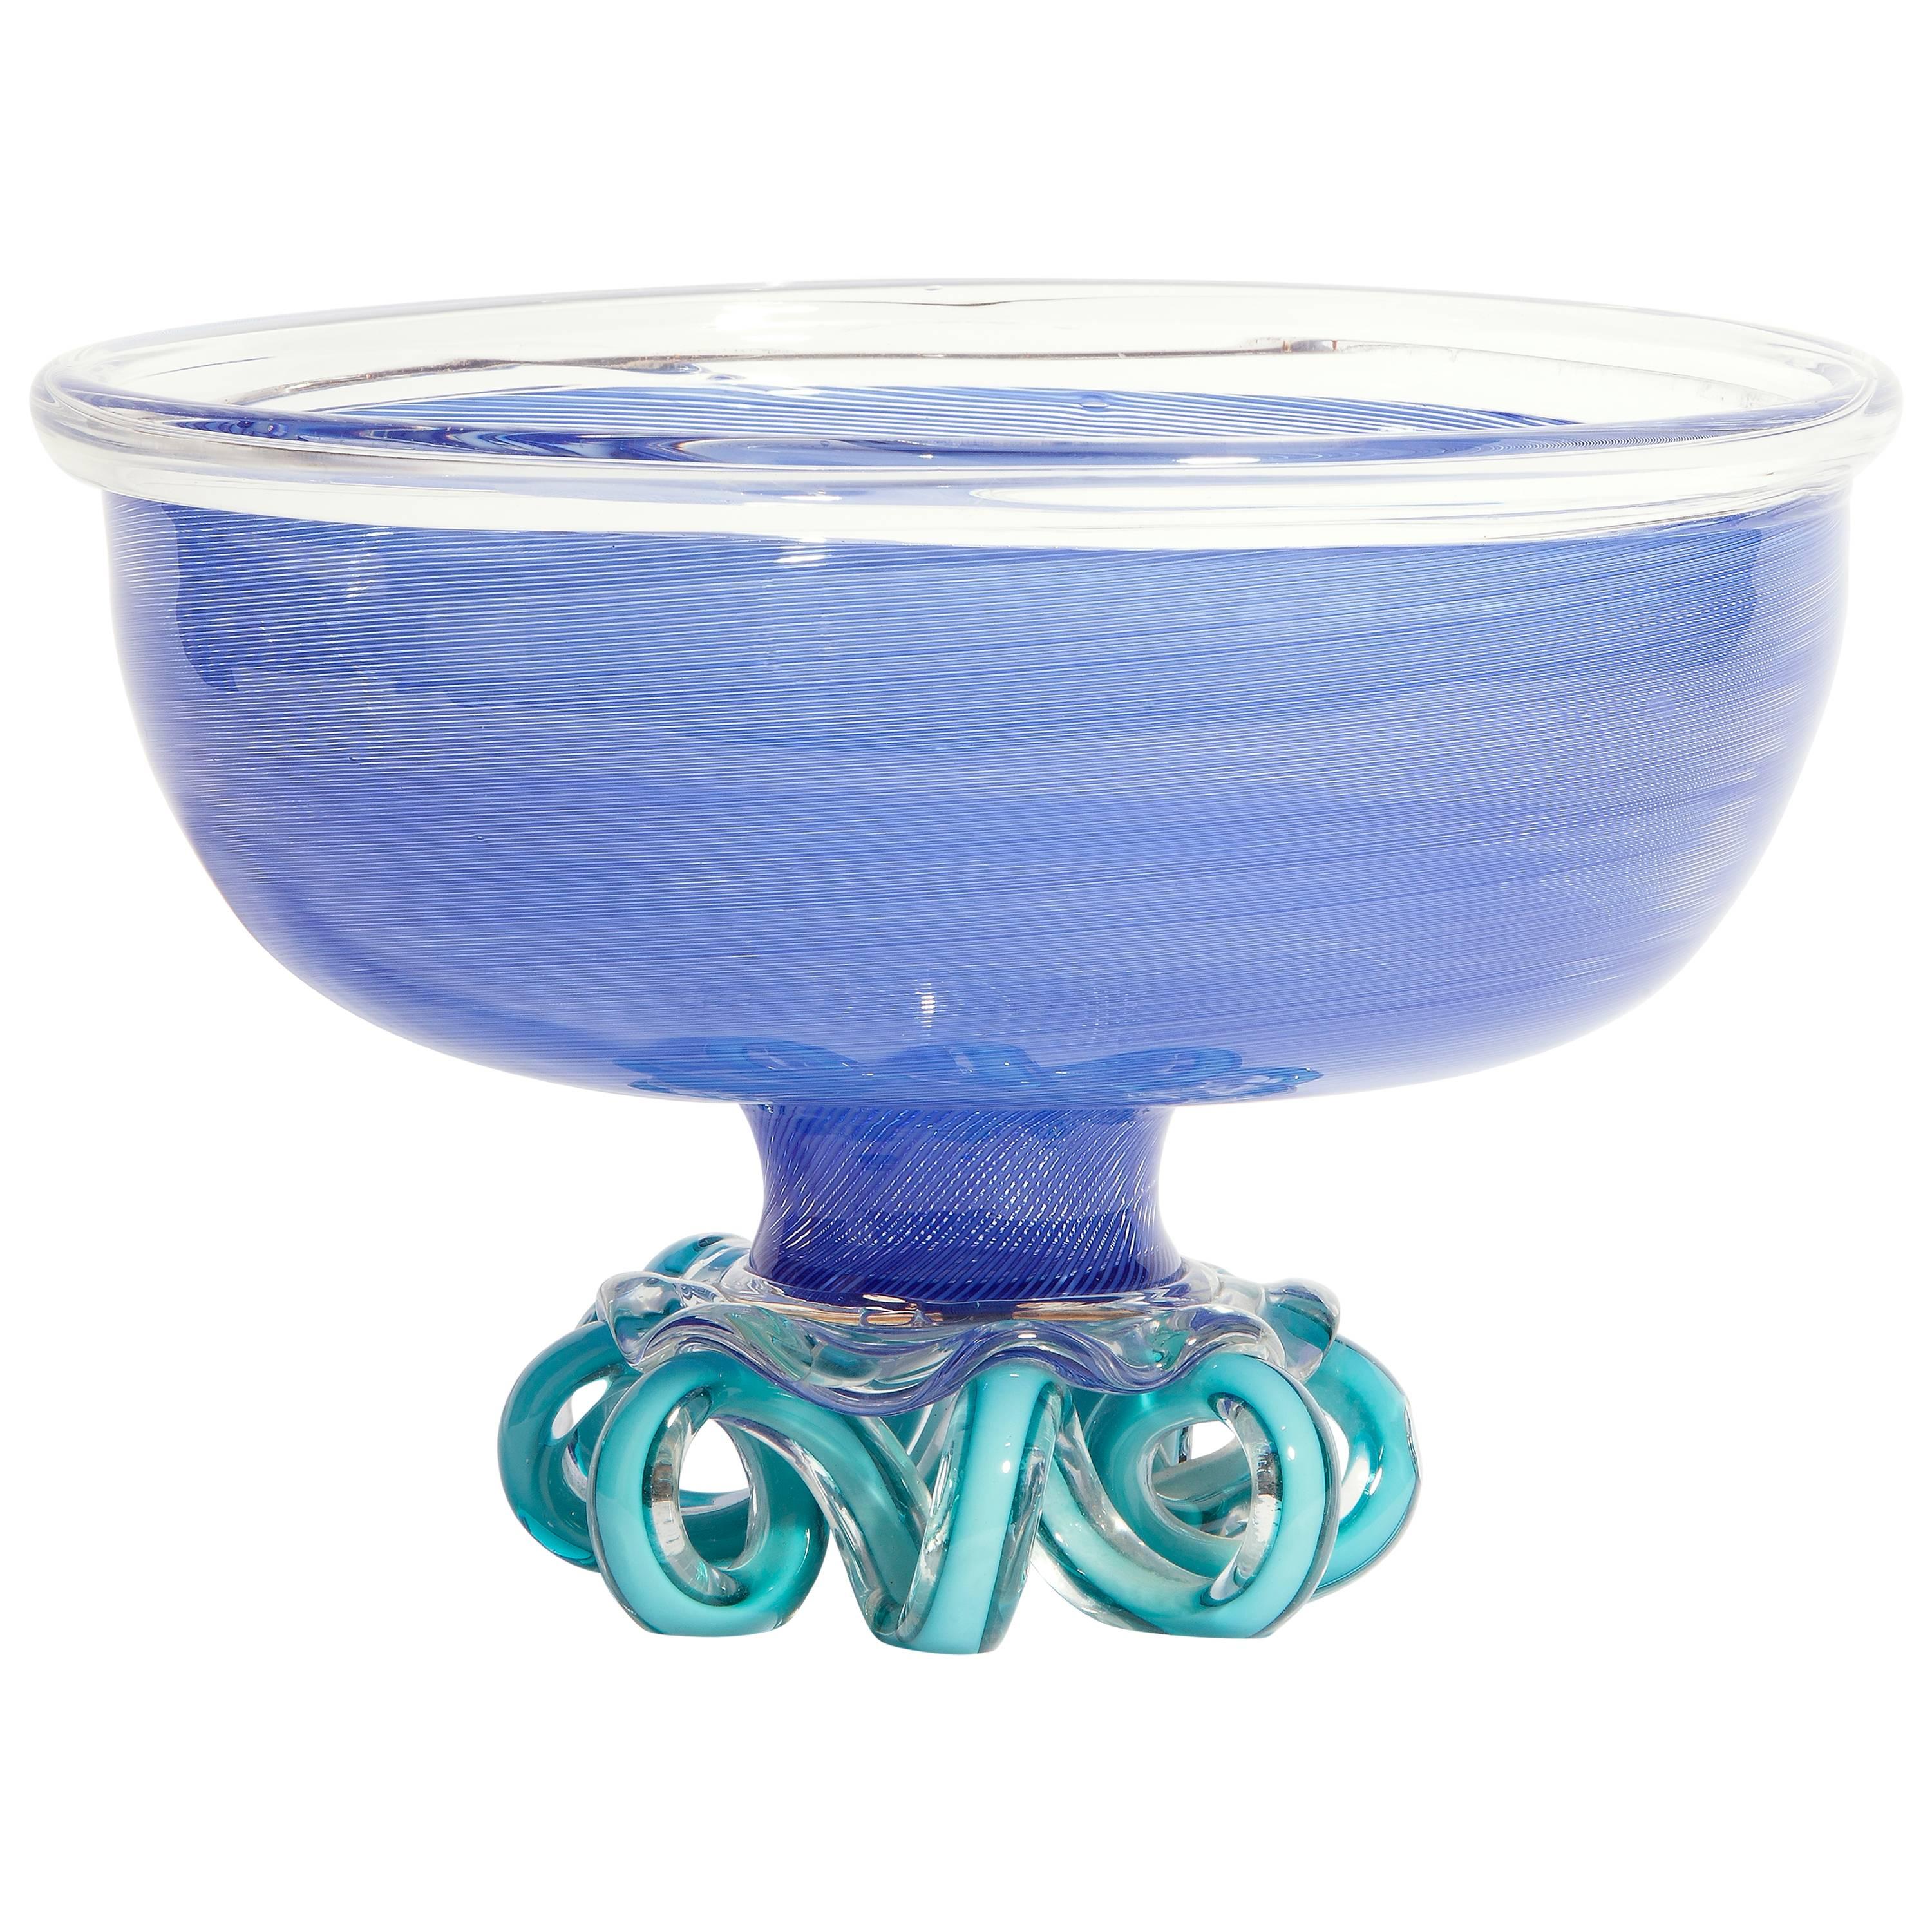 A.D. Copier and Lino Tagliapietra, One-off Blue Art Glass Bowl 'Tazza' For Sale